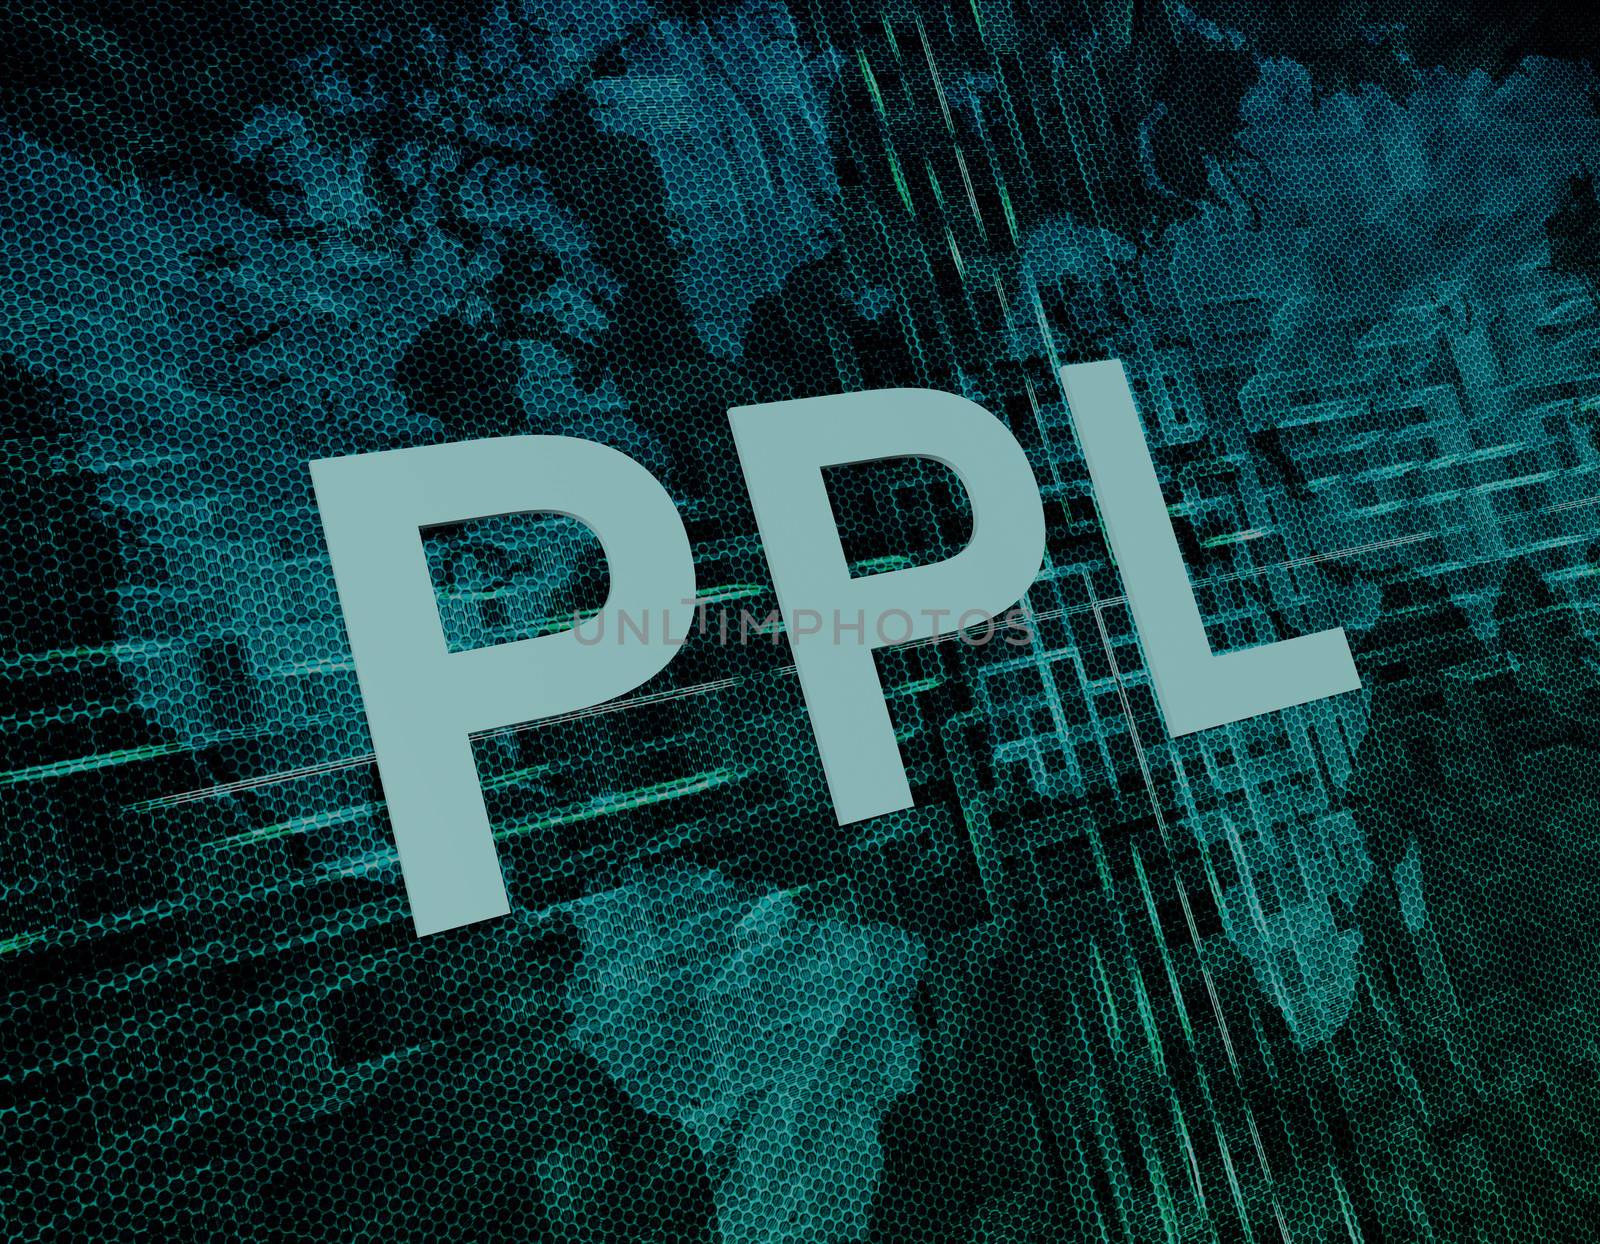 Words on digital world map concept: PPL